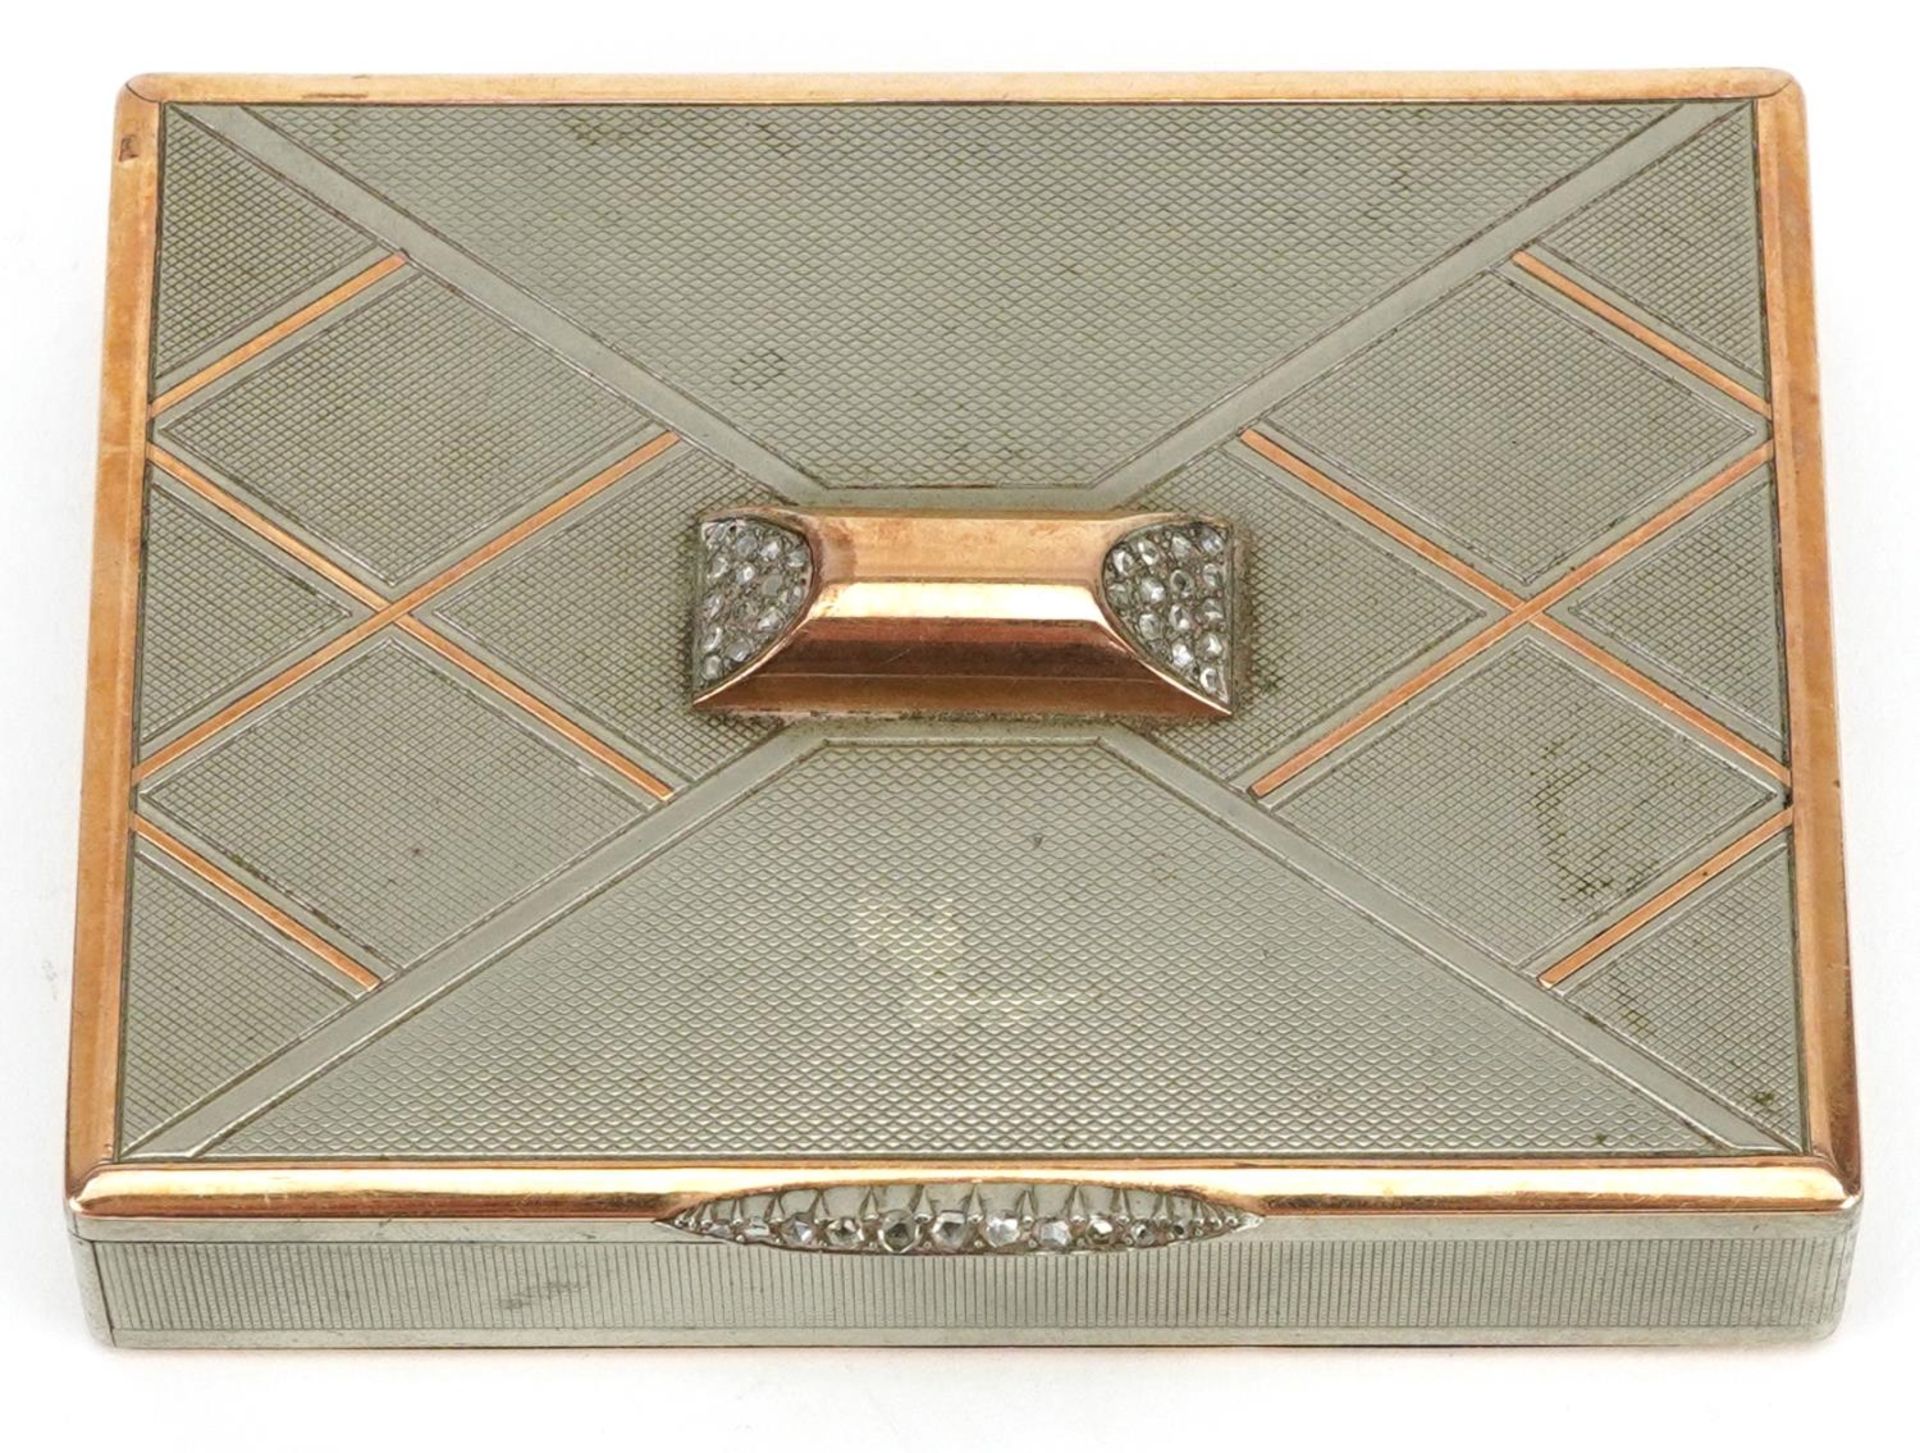 Van Cleef & Arpels, Art Deco Styptor engine turned diamond set minaudiere with rose gold overlay, - Image 2 of 6